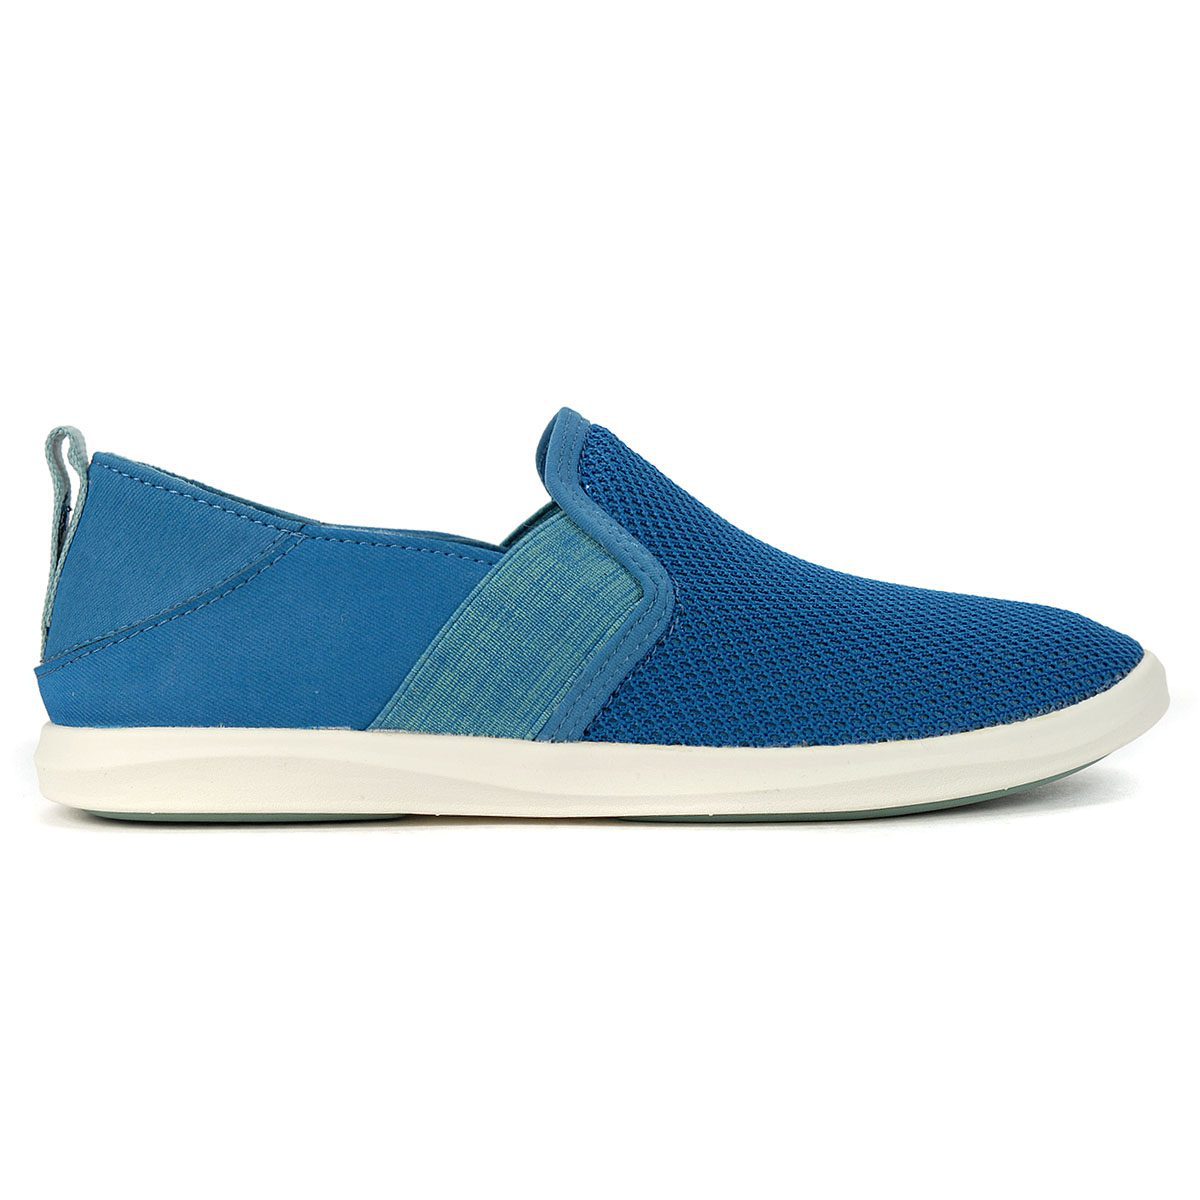 OluKai Women's Hale‘iwa Teal/Mineral Blue Slip-On Sneakers - WOOKI.COM